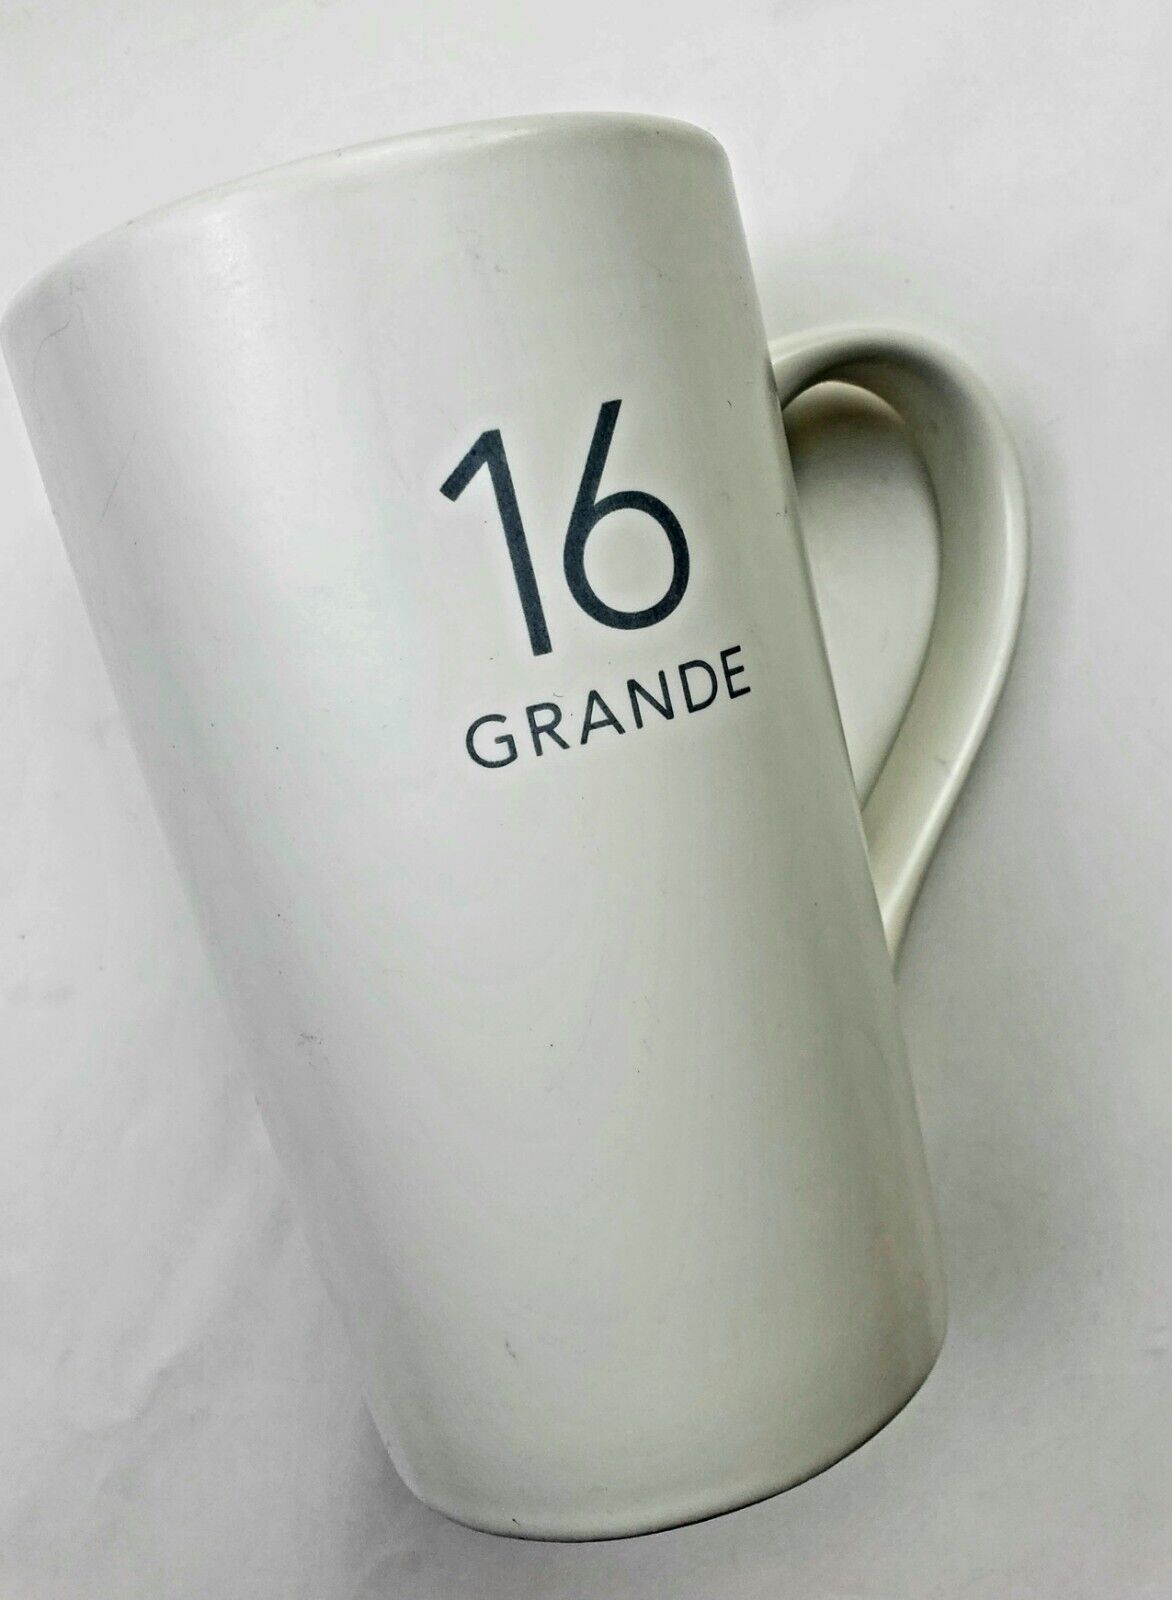 Starbucks Coffee 2011 White Ceramic 16 Grande Ounce Mug Cup/ Gray Lettering  